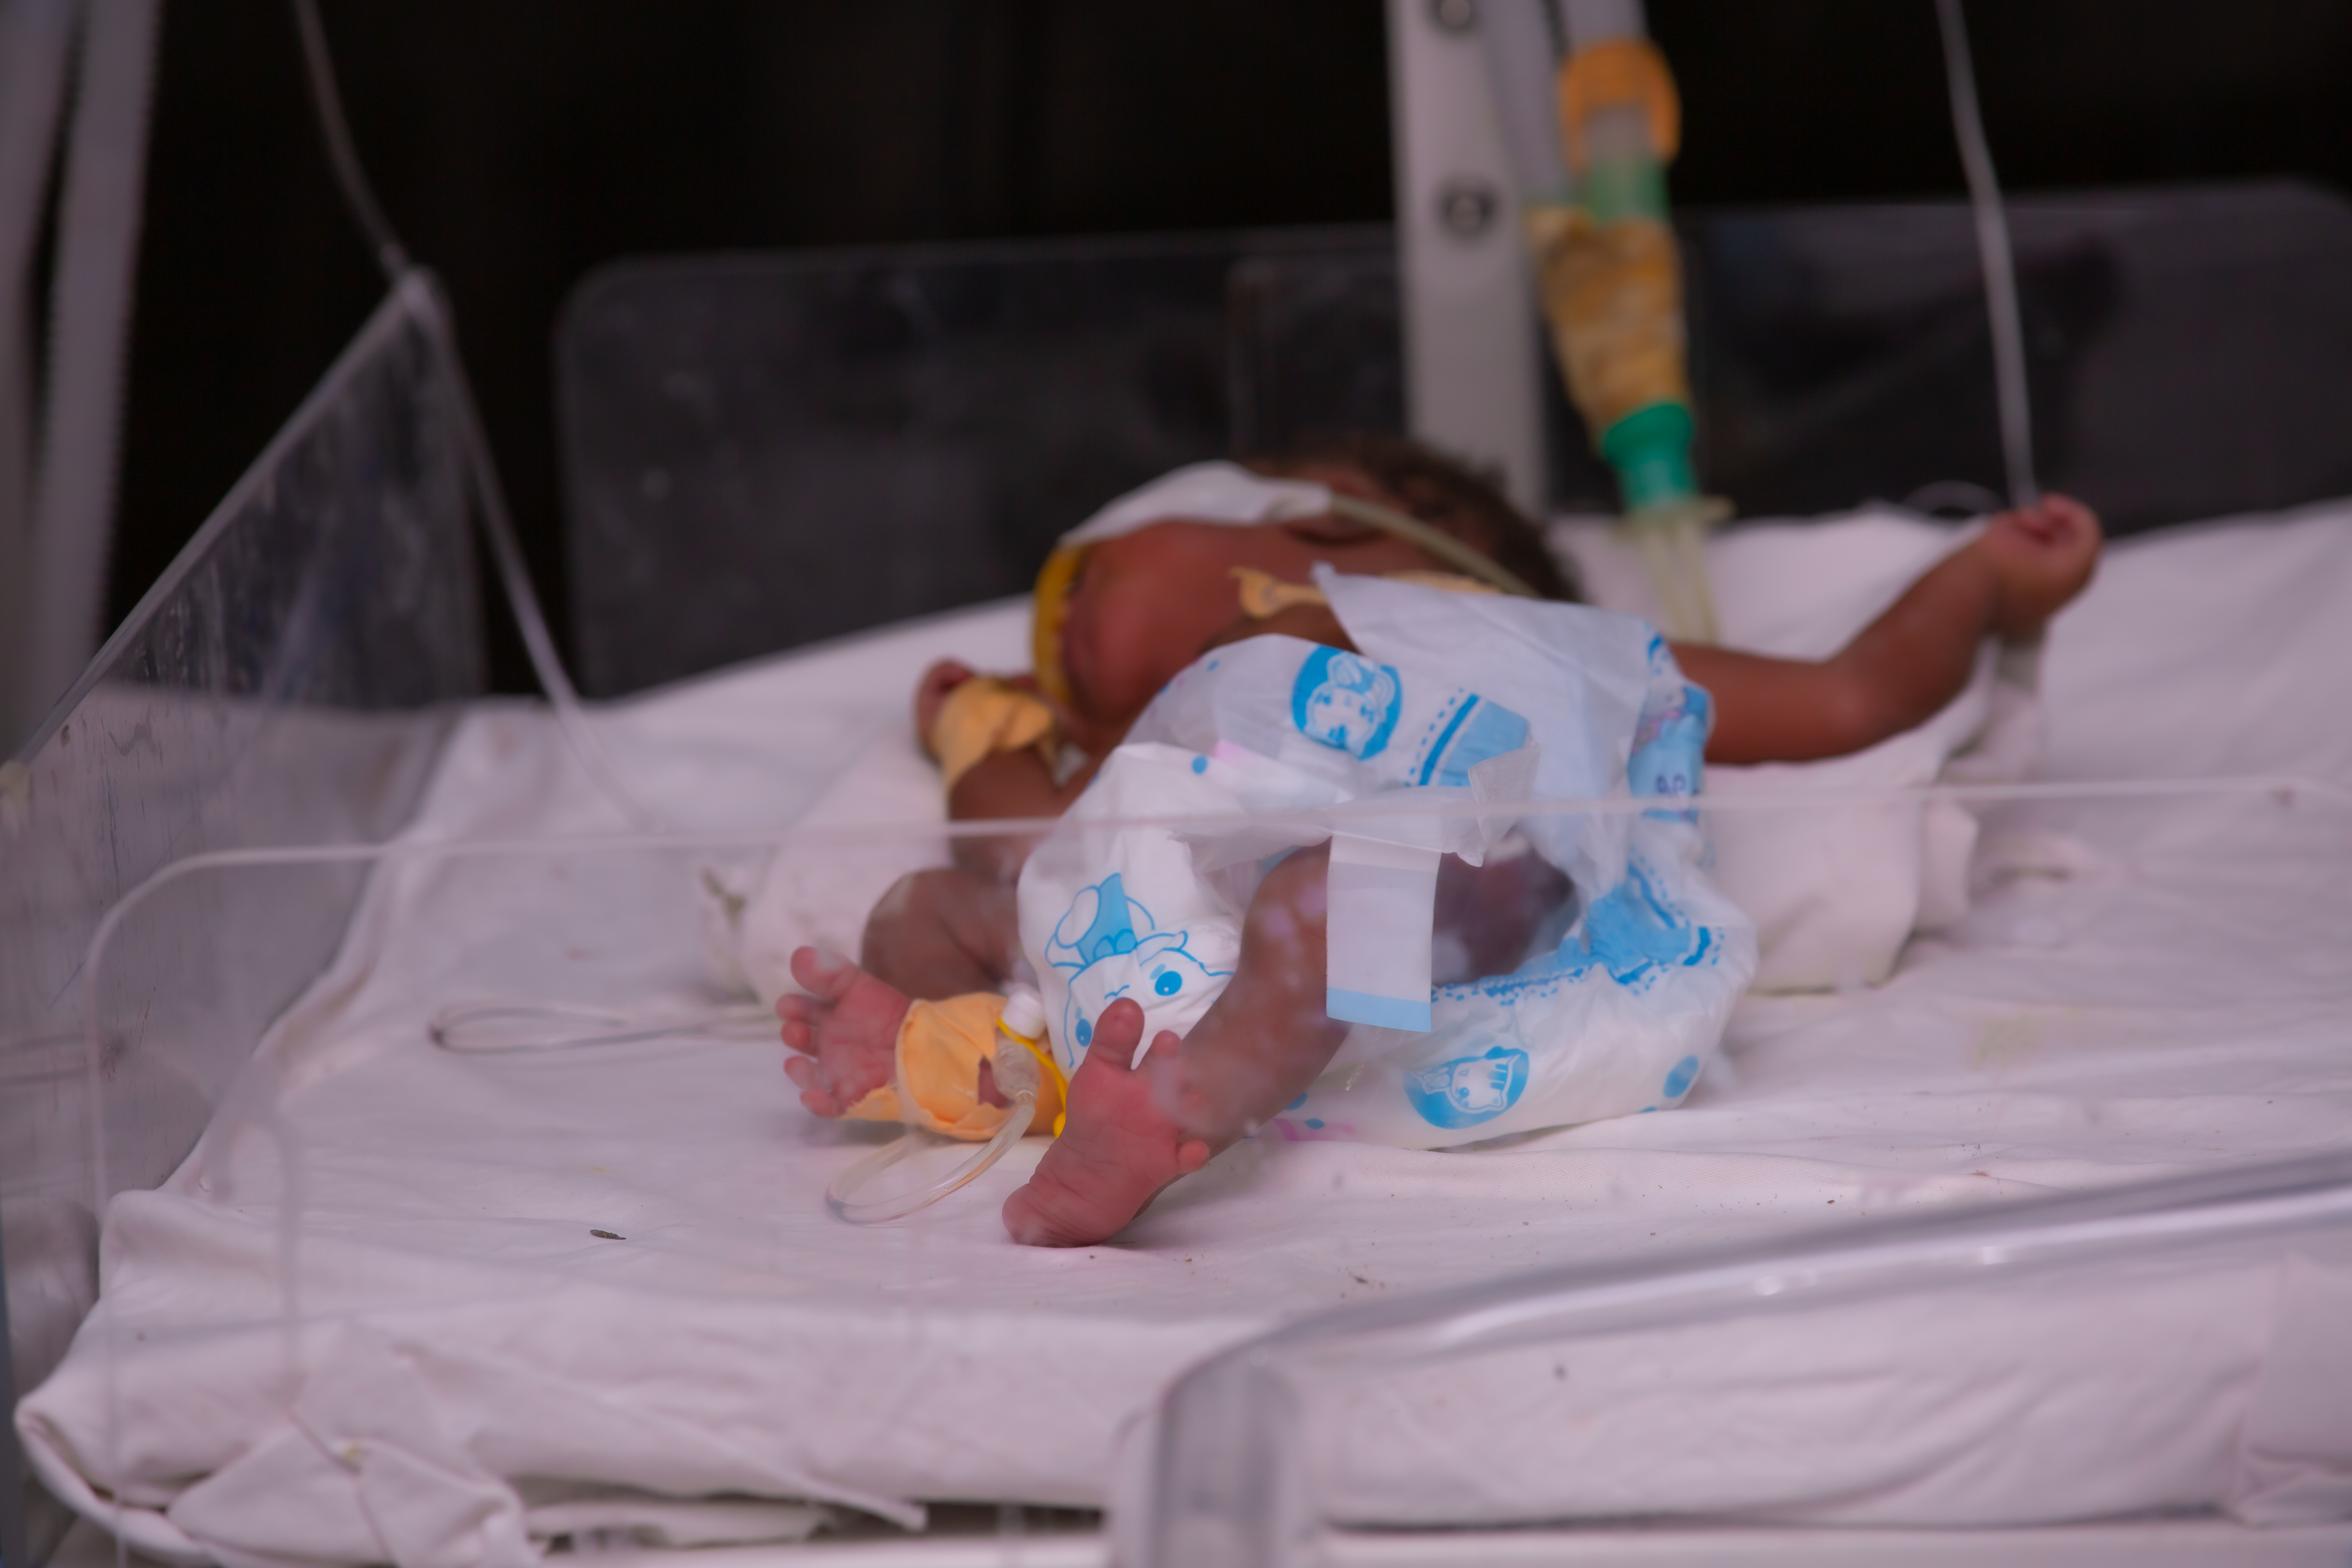 Preventing African newborn and children's deaths through proactive patient management - "Pro-Africa"